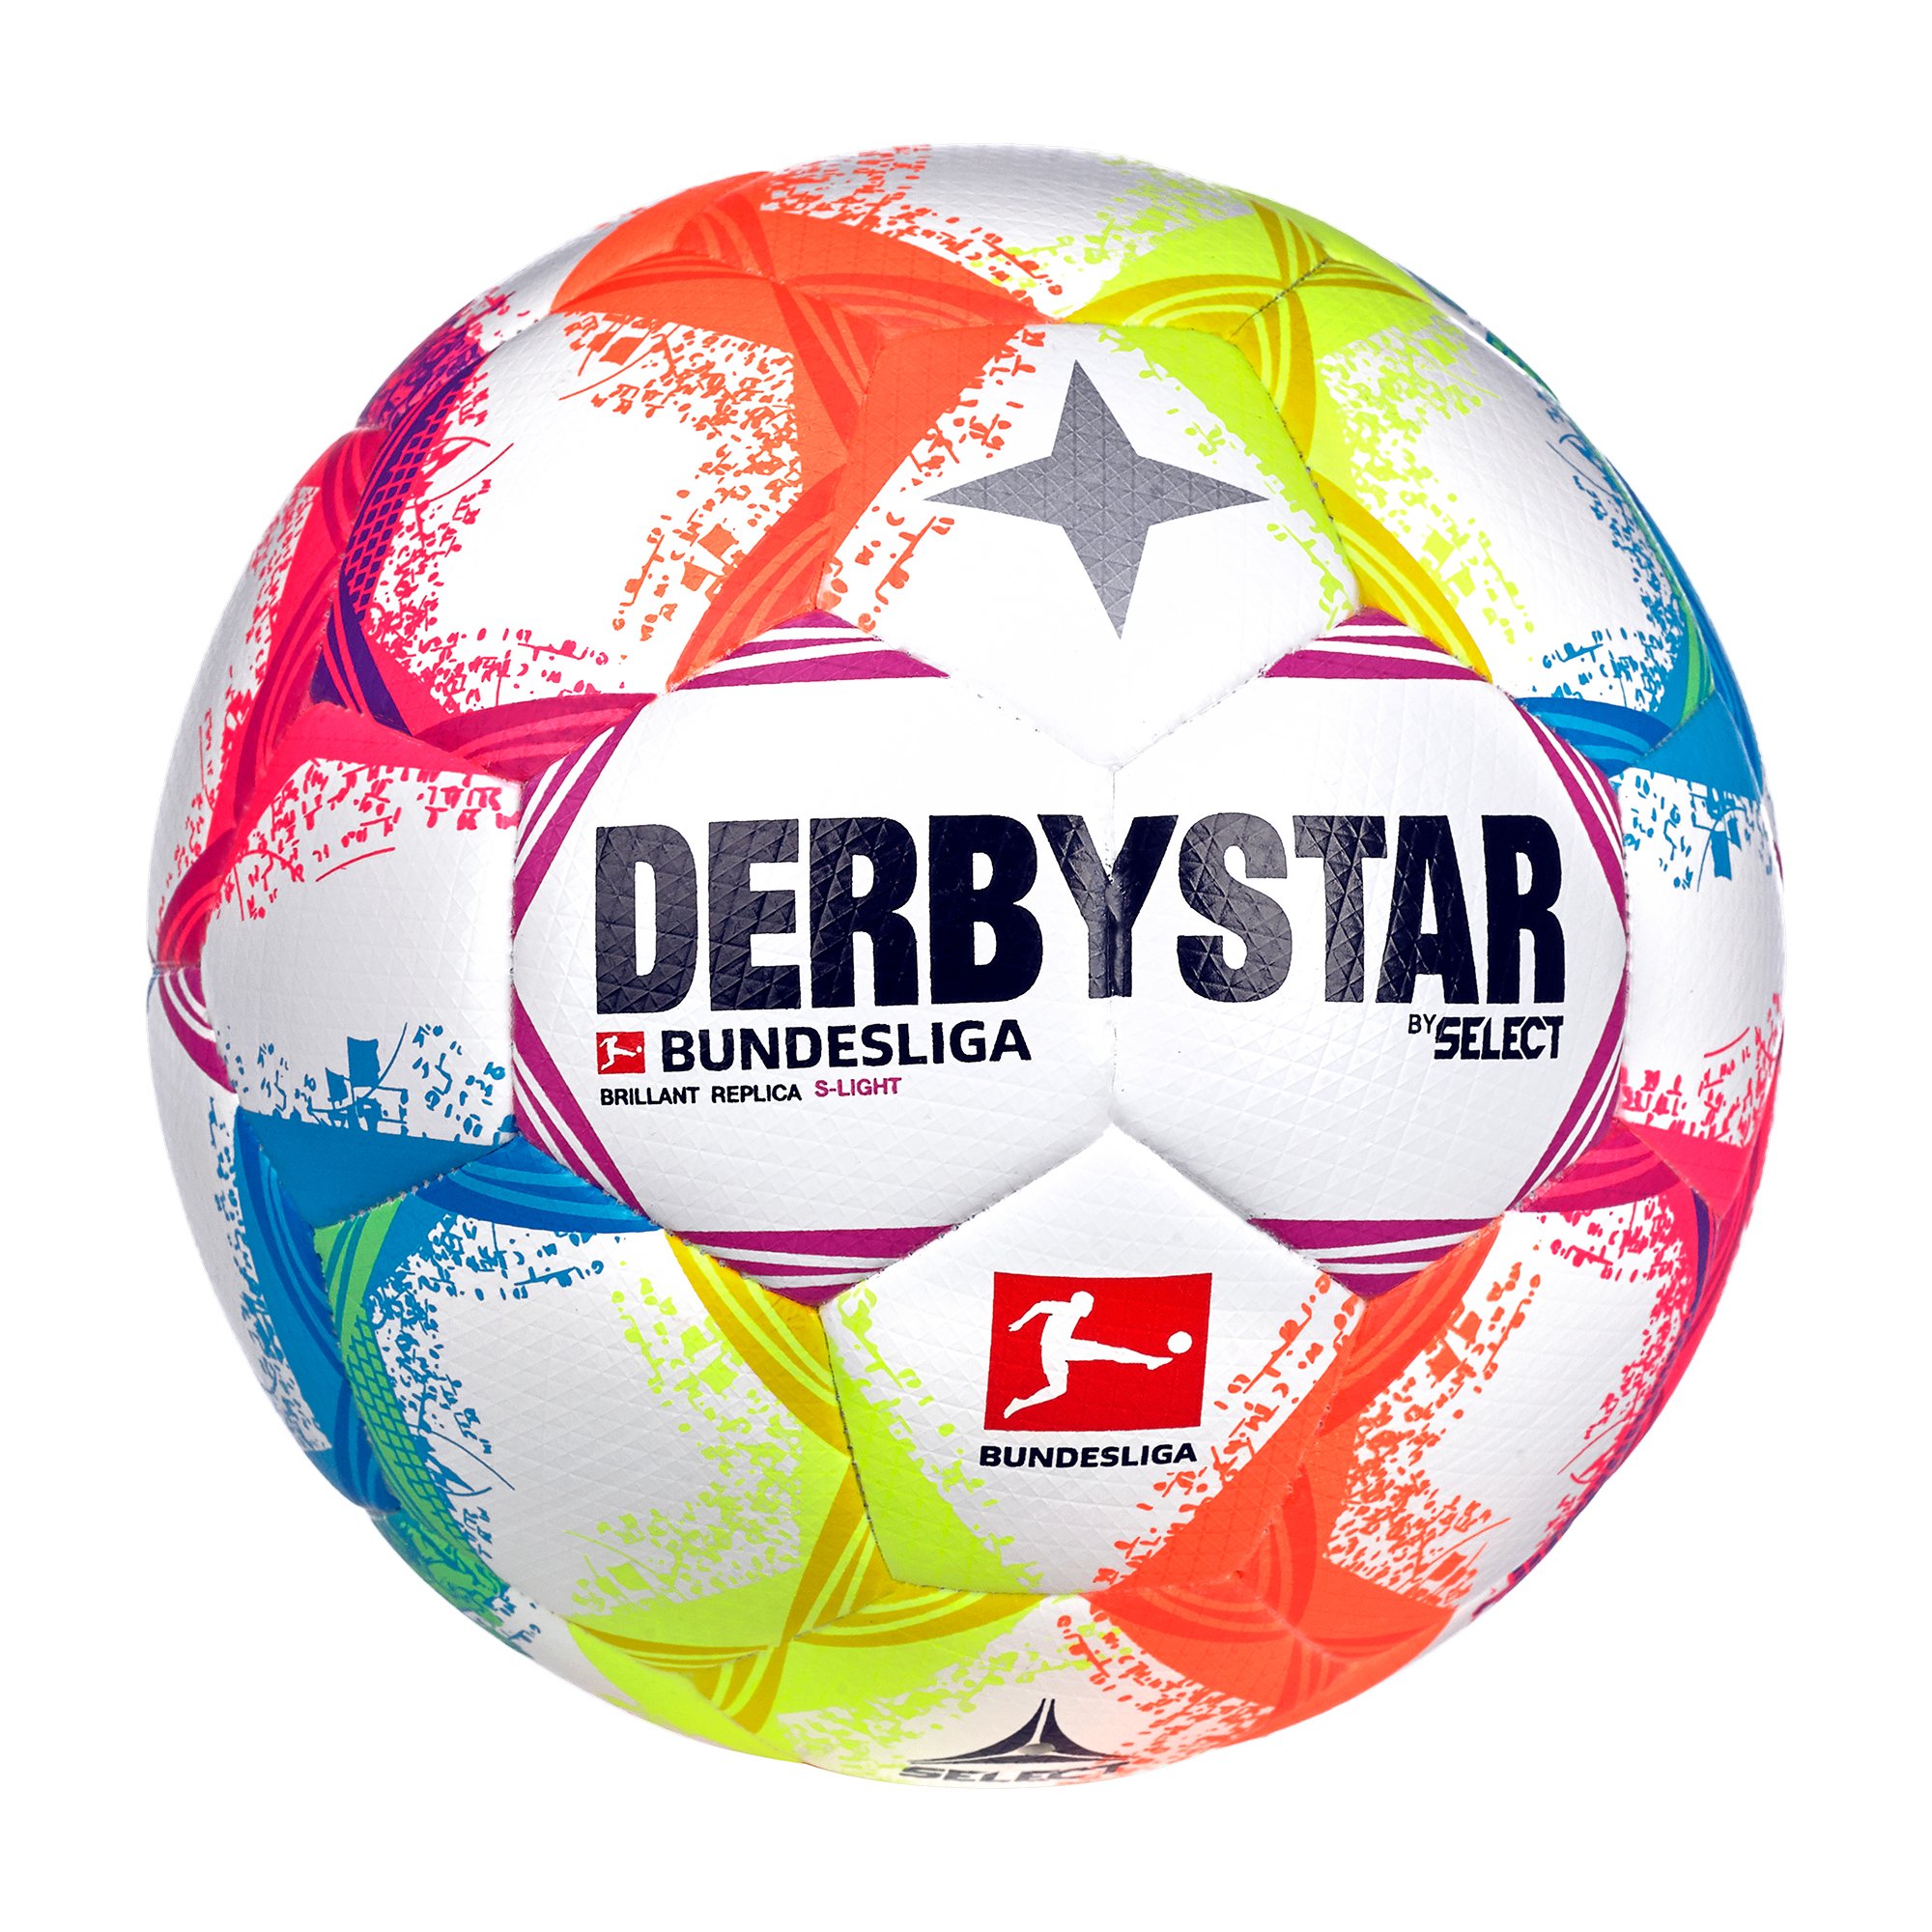 Derbystar Bundesliga Brillant Replica S-Light v22